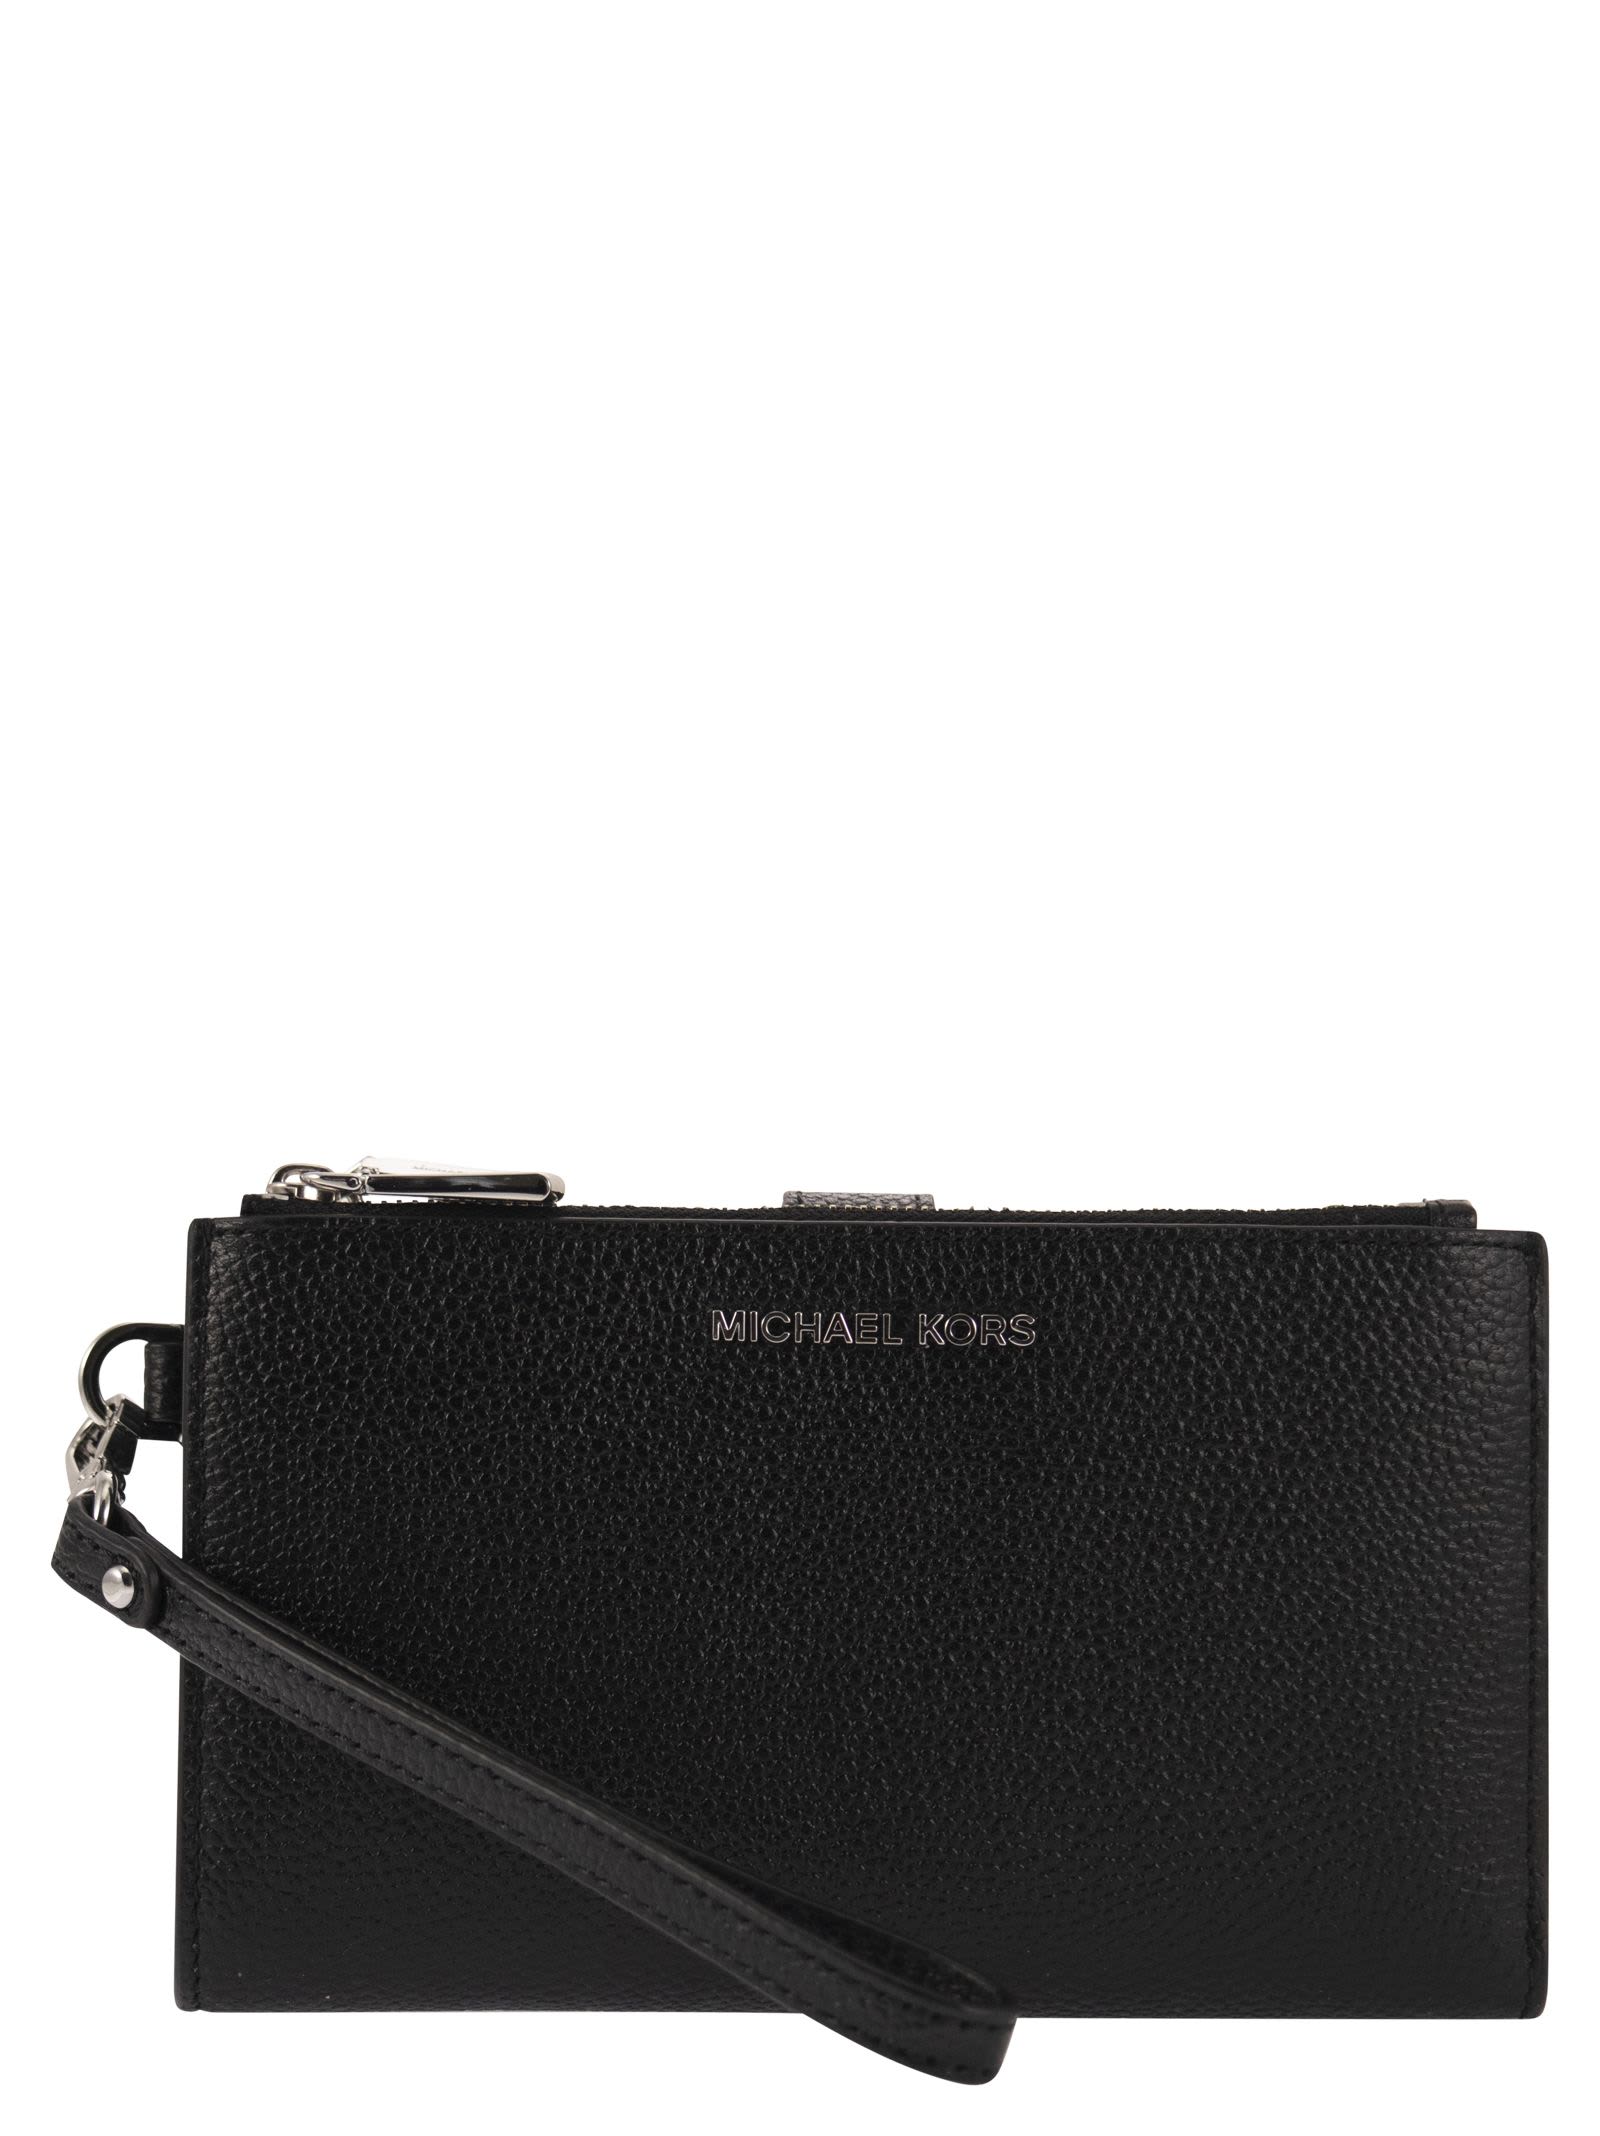 Michael Kors Grained Leather Smartphone Wallet In Black